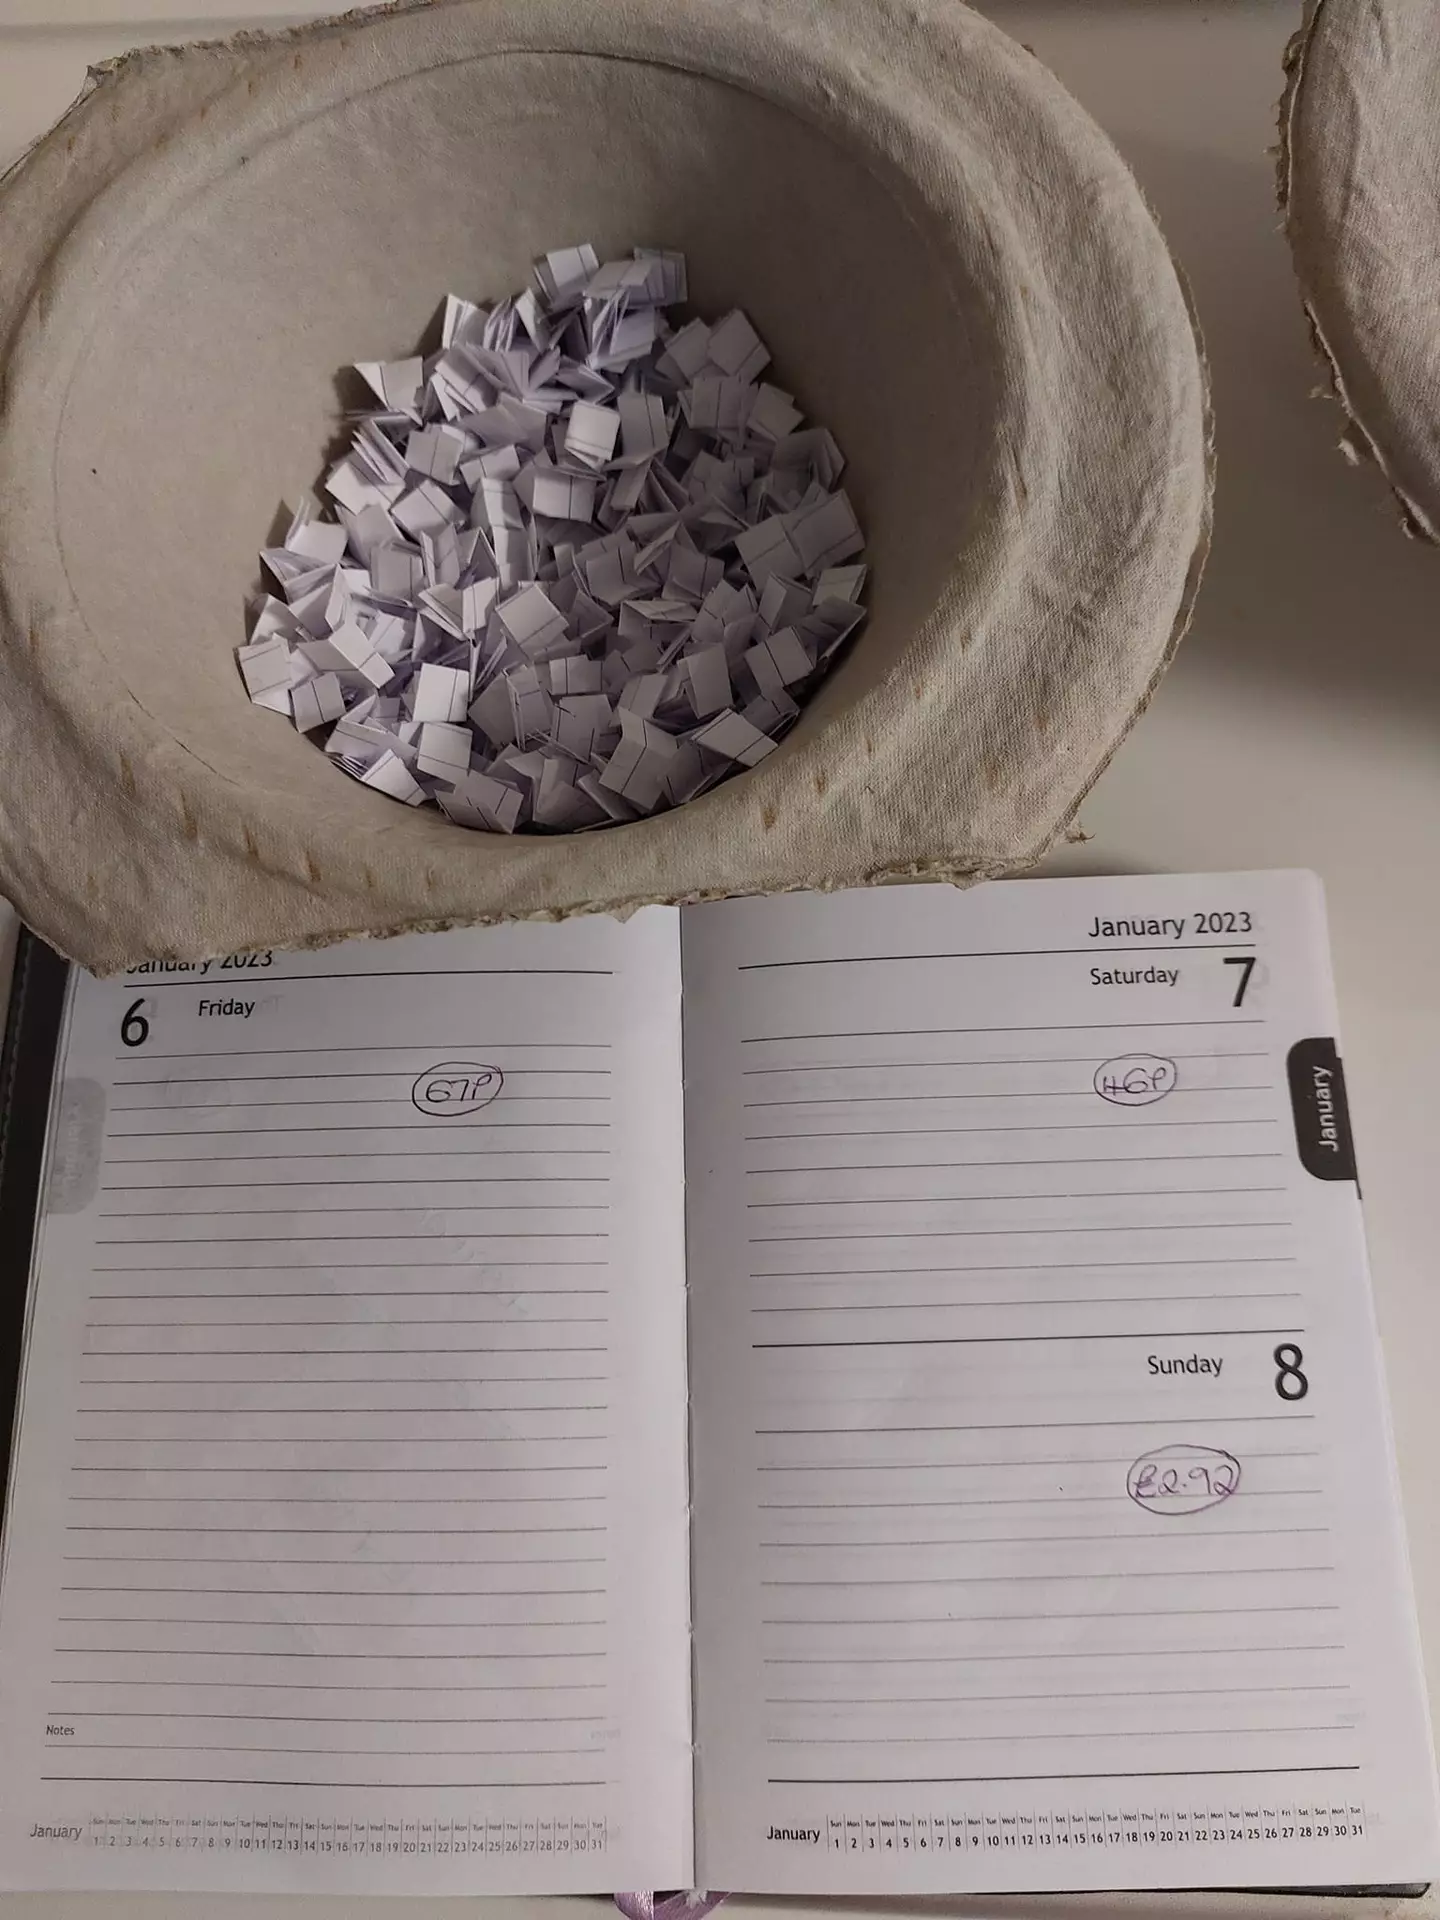 She's using her diary to help plot her savings.